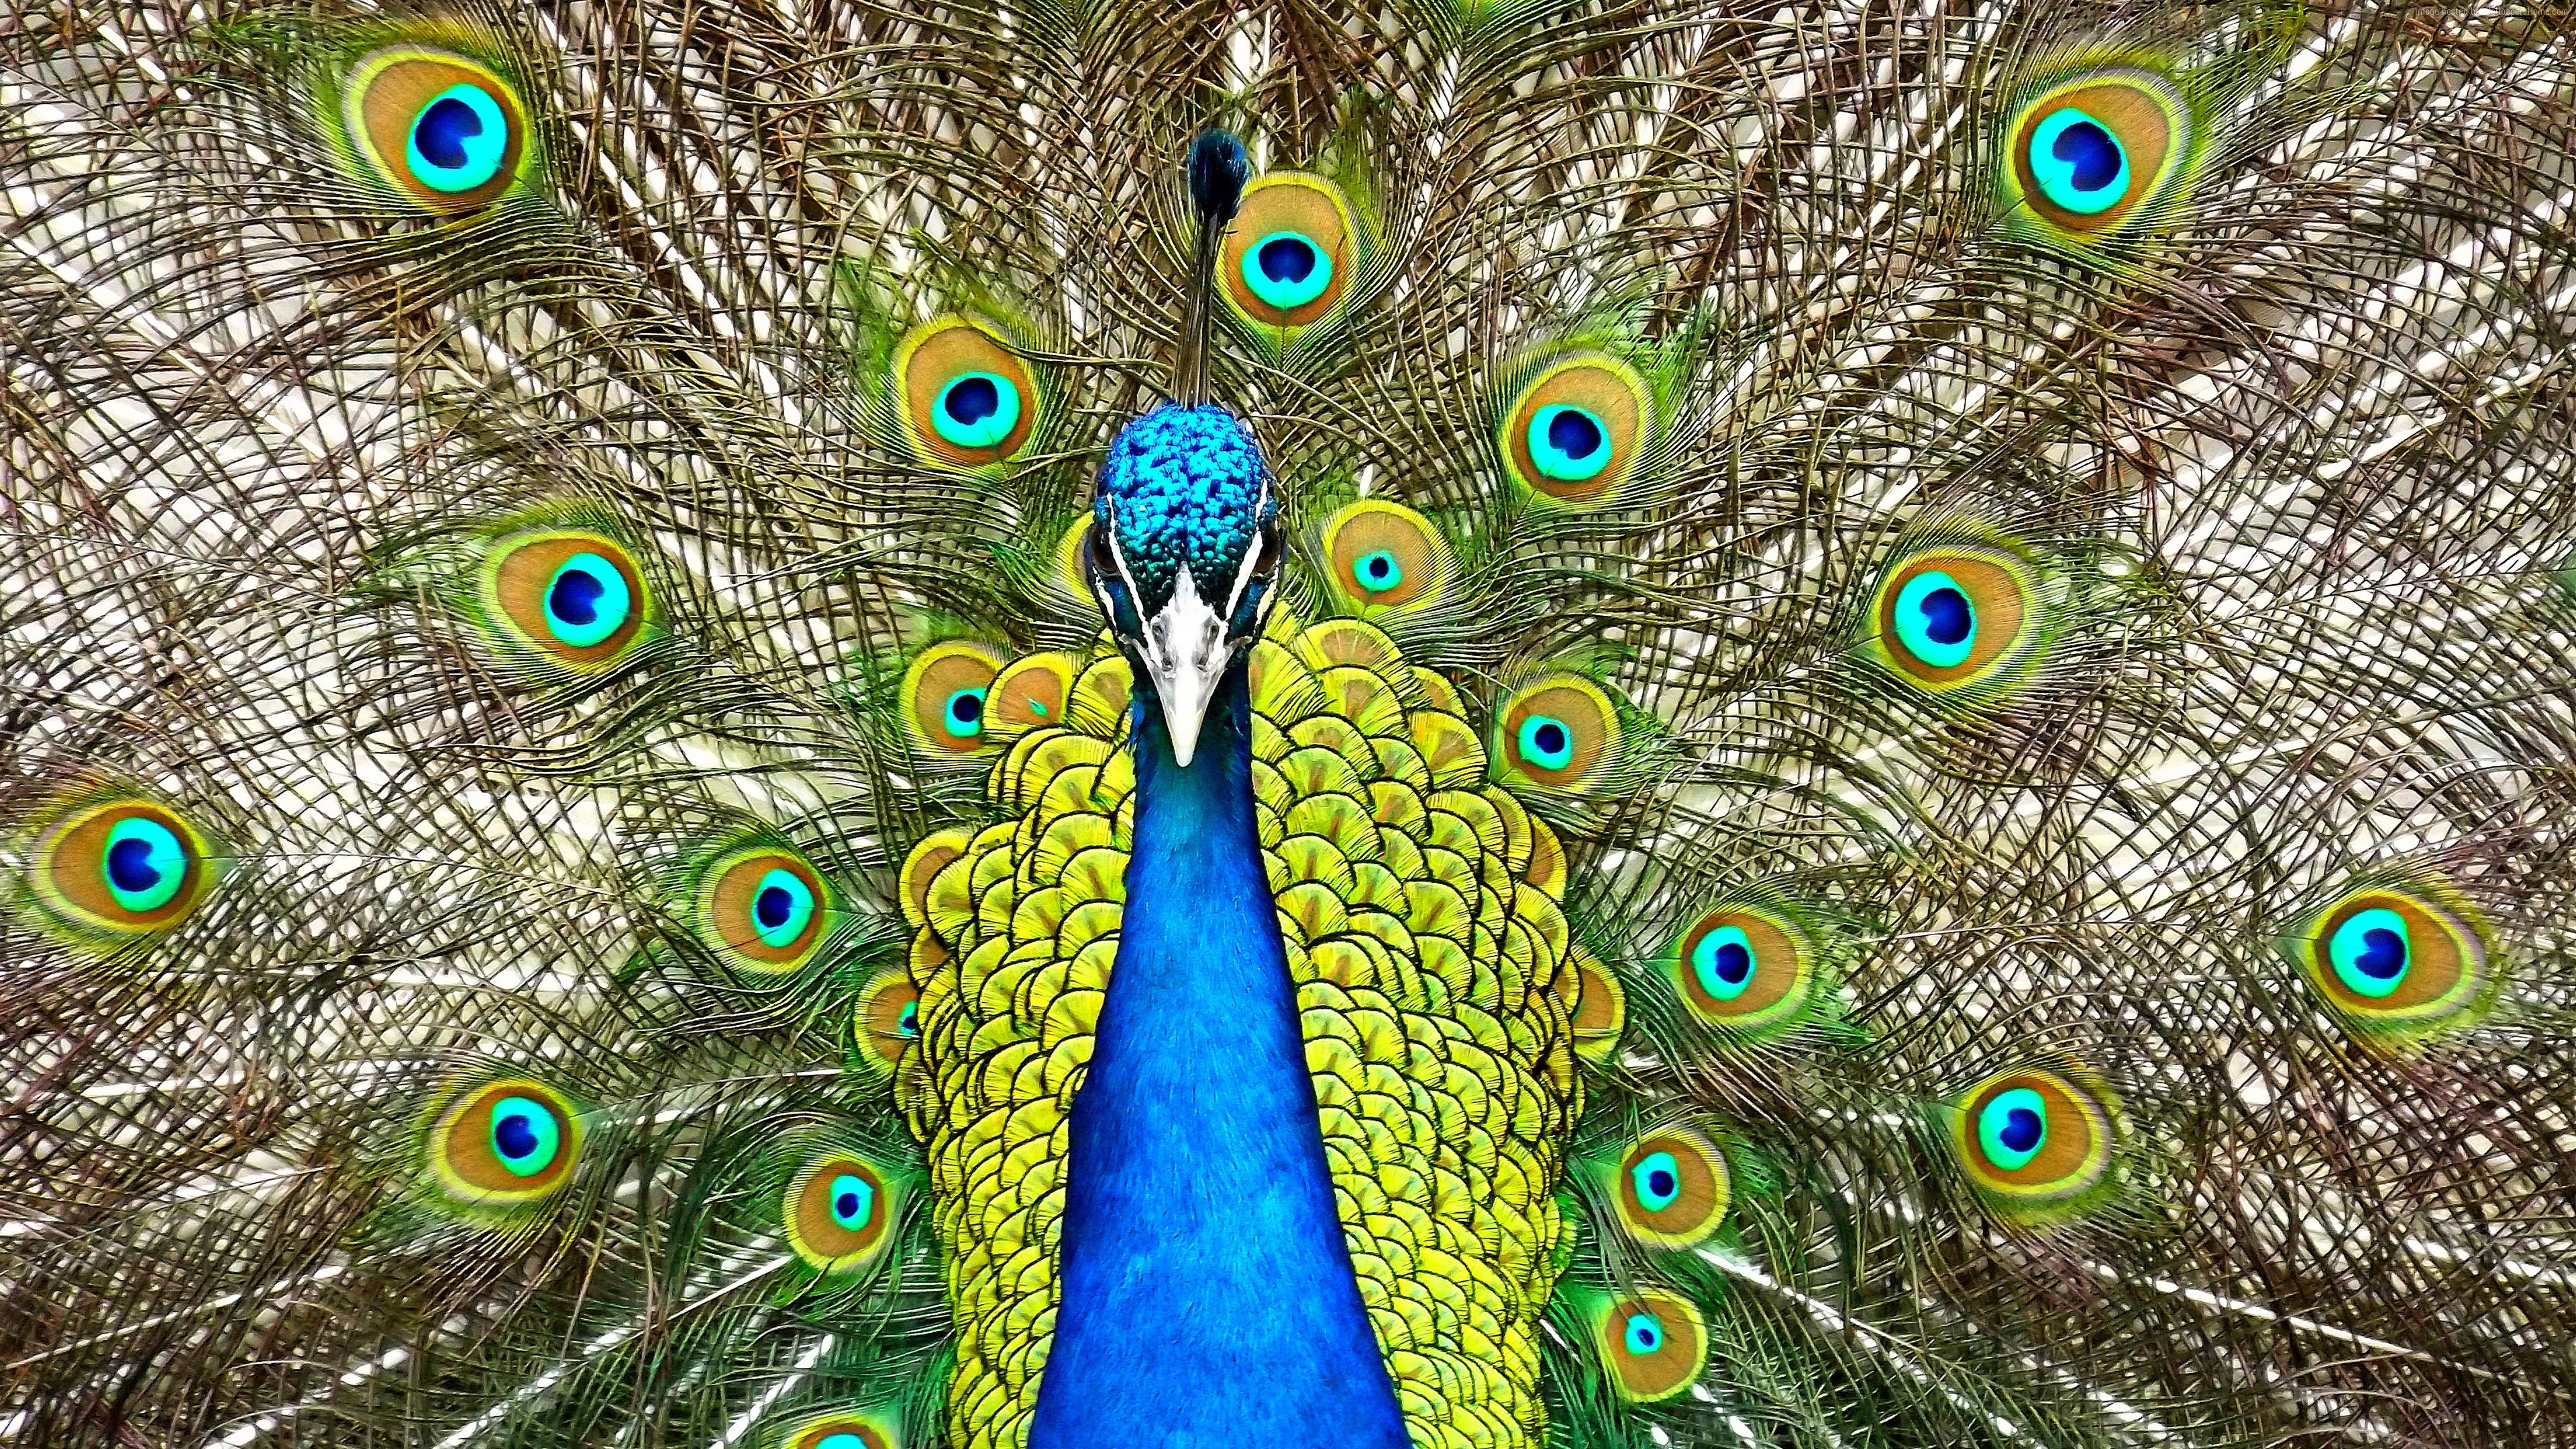 Peacock9365215467 - Peacock - HD Wallpaper 